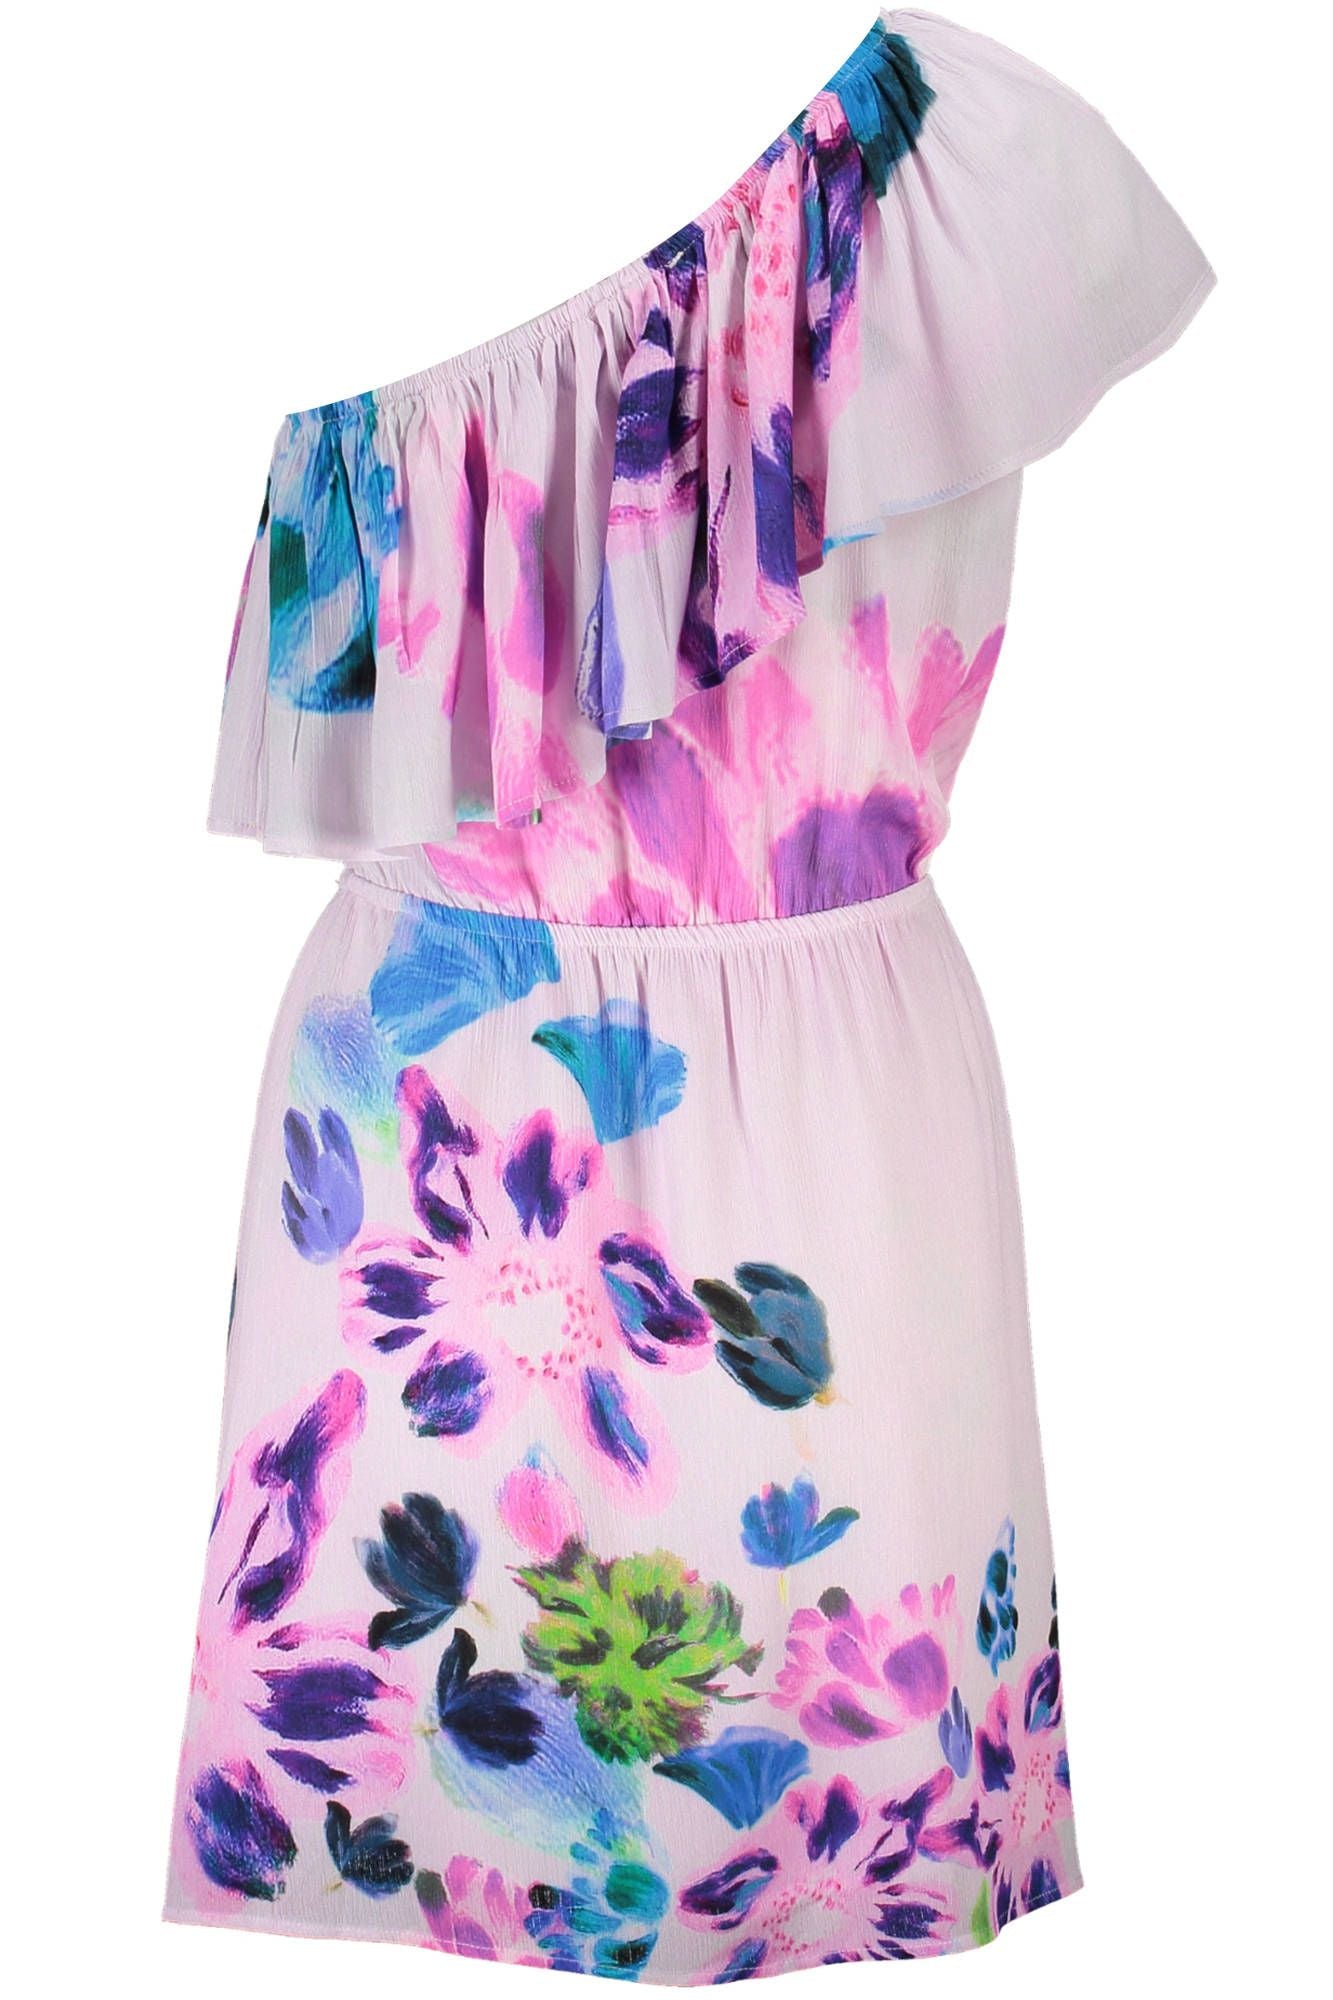 Chic Pink One-Shoulder Short Dress with Contrasting Details